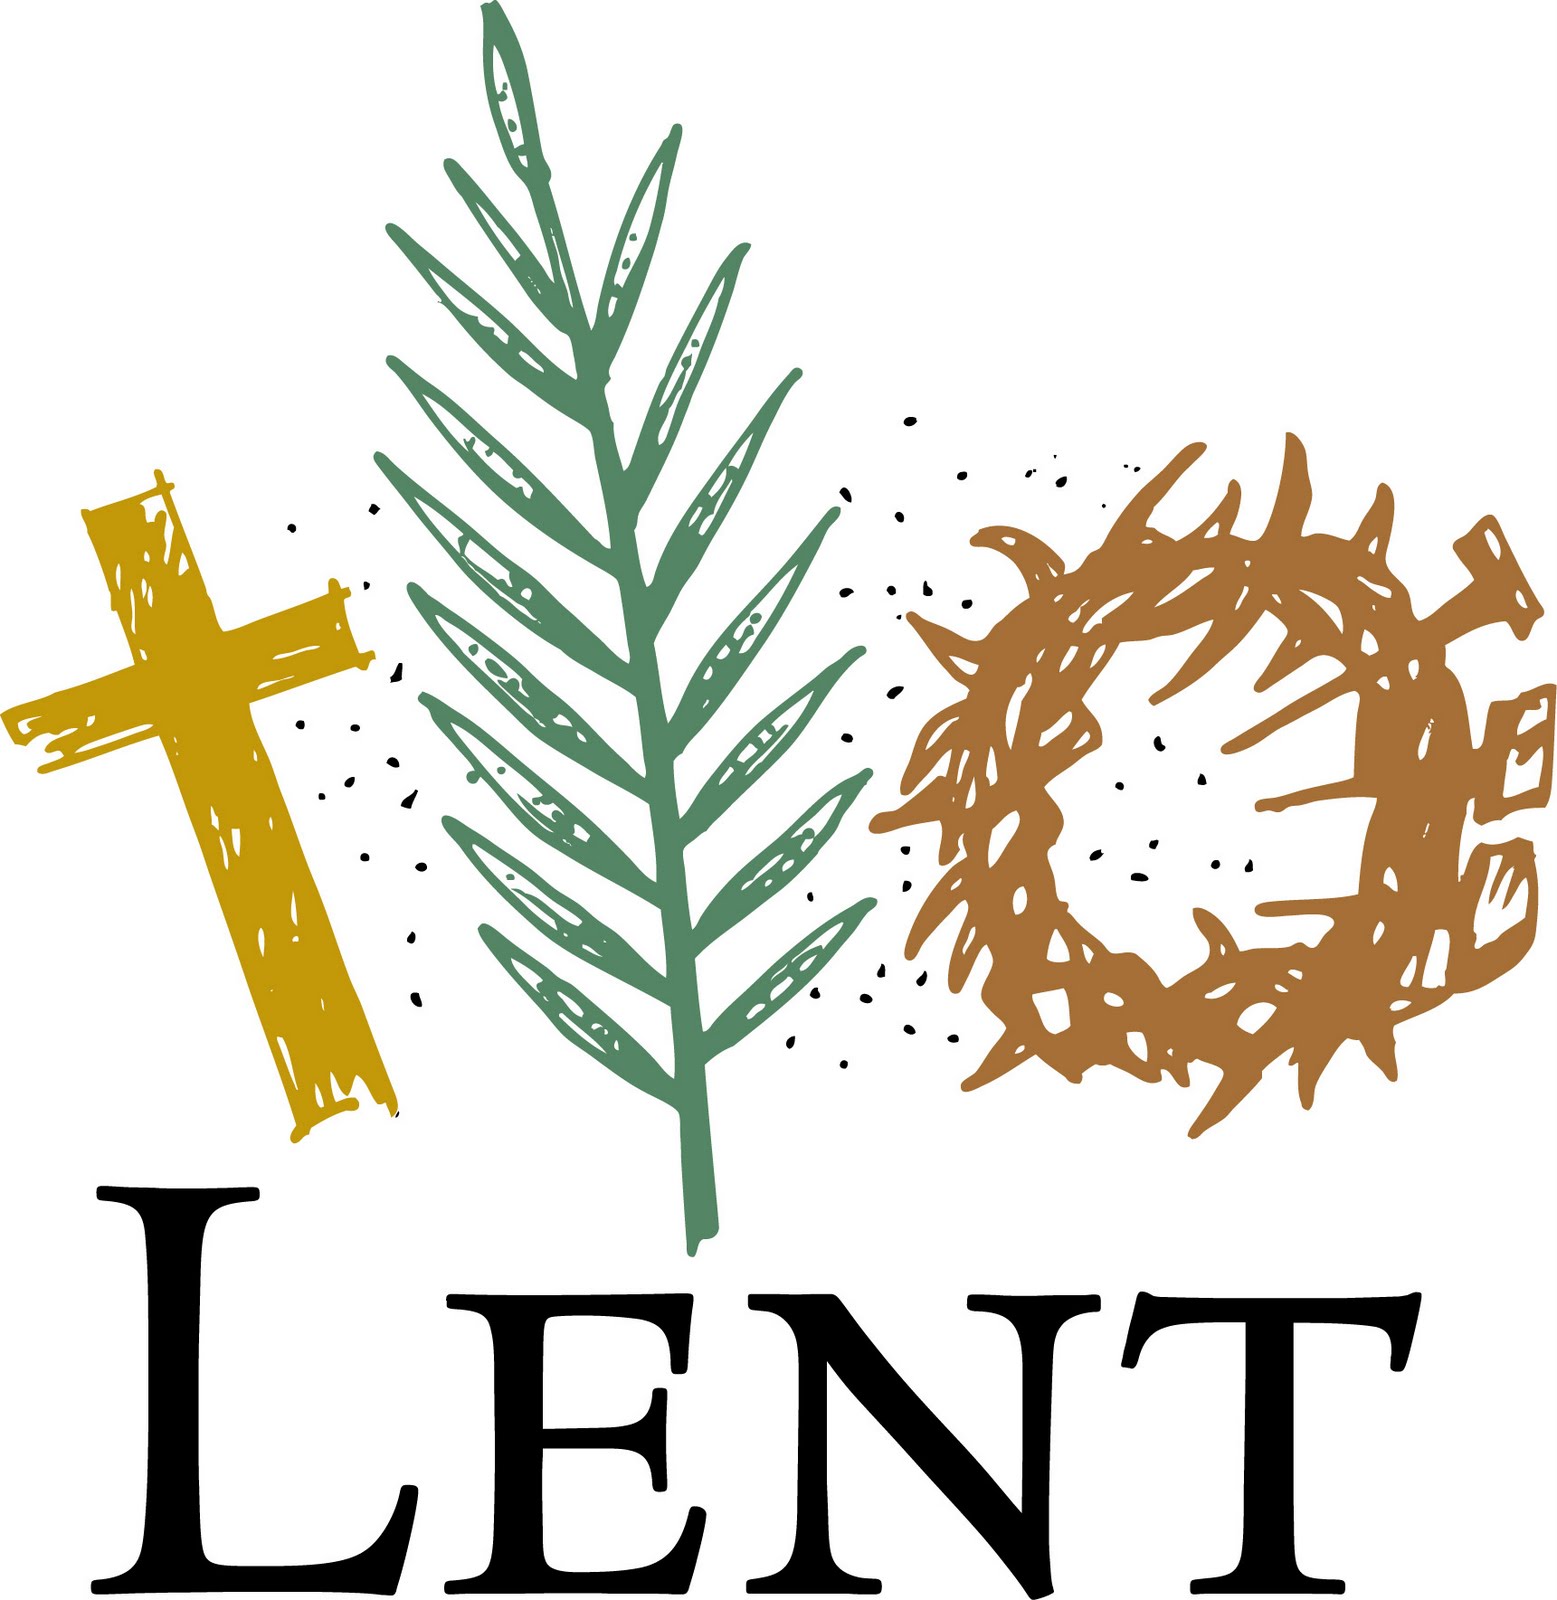 1000+ images about Lent on Pinterest.